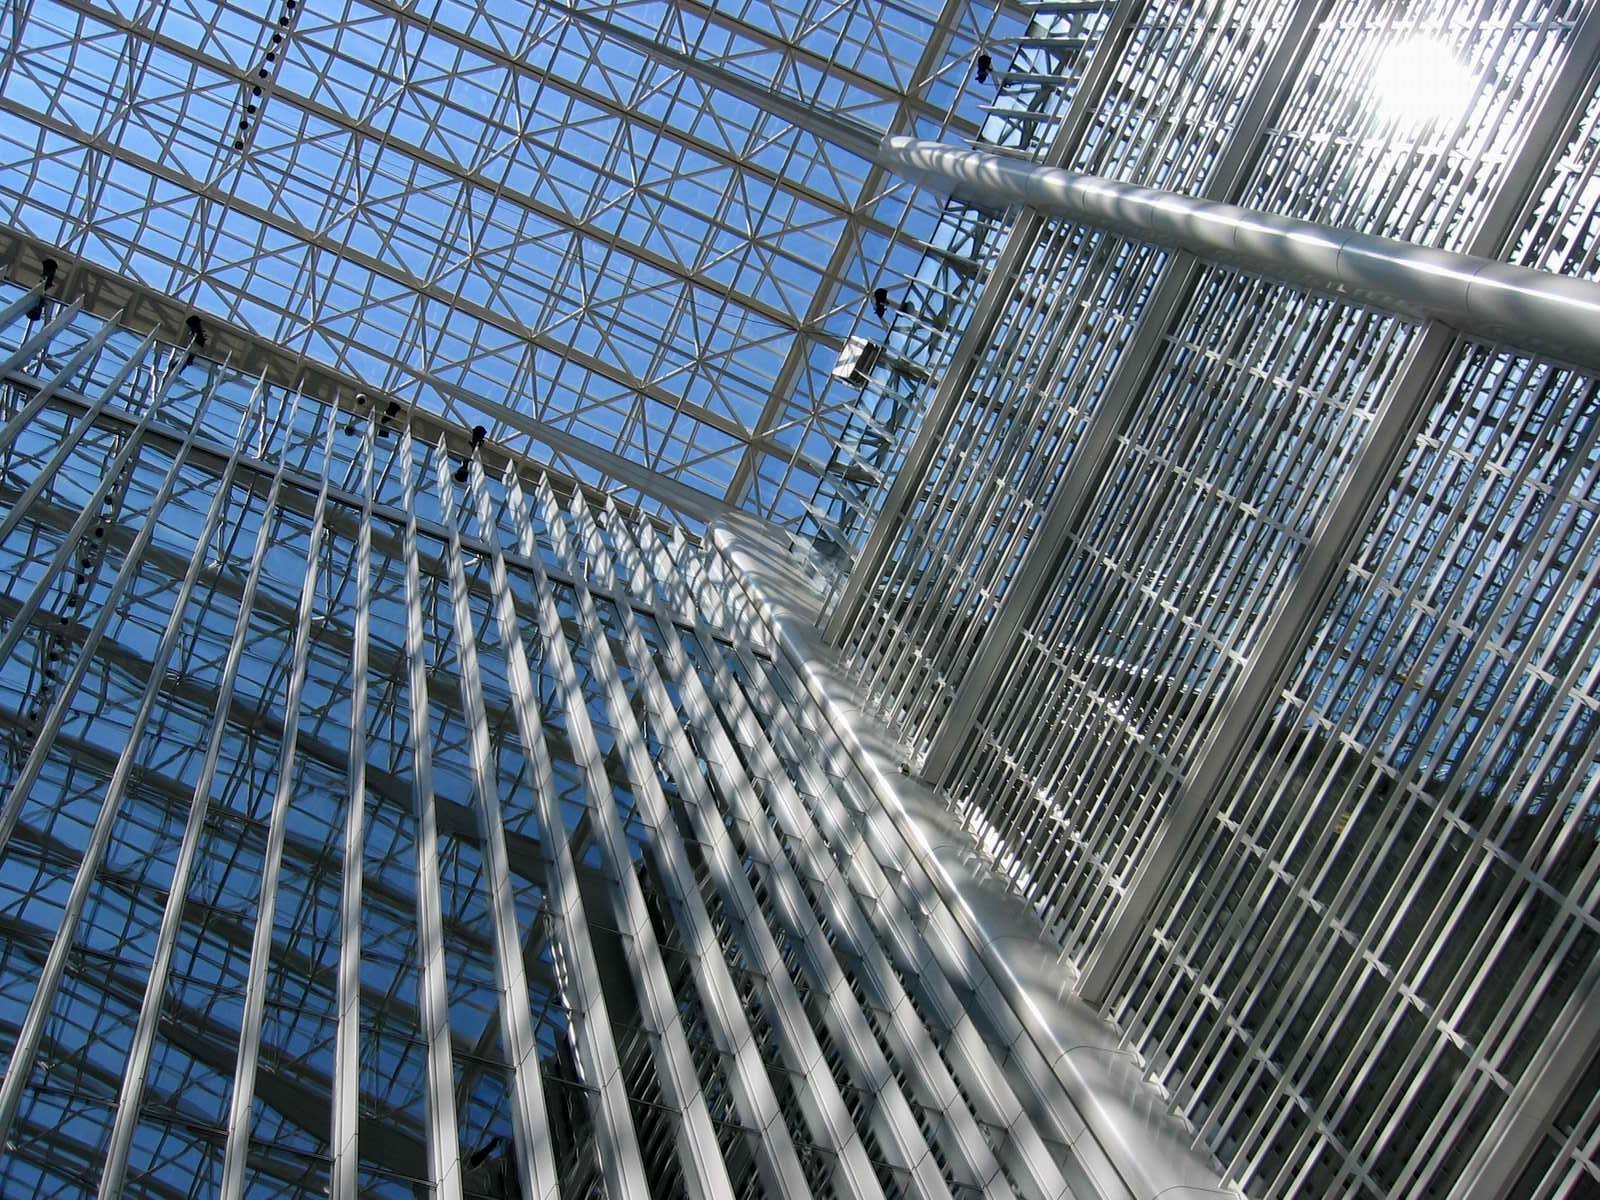 The World Bank Main Complex Atrium. Image credit: Jaakko H